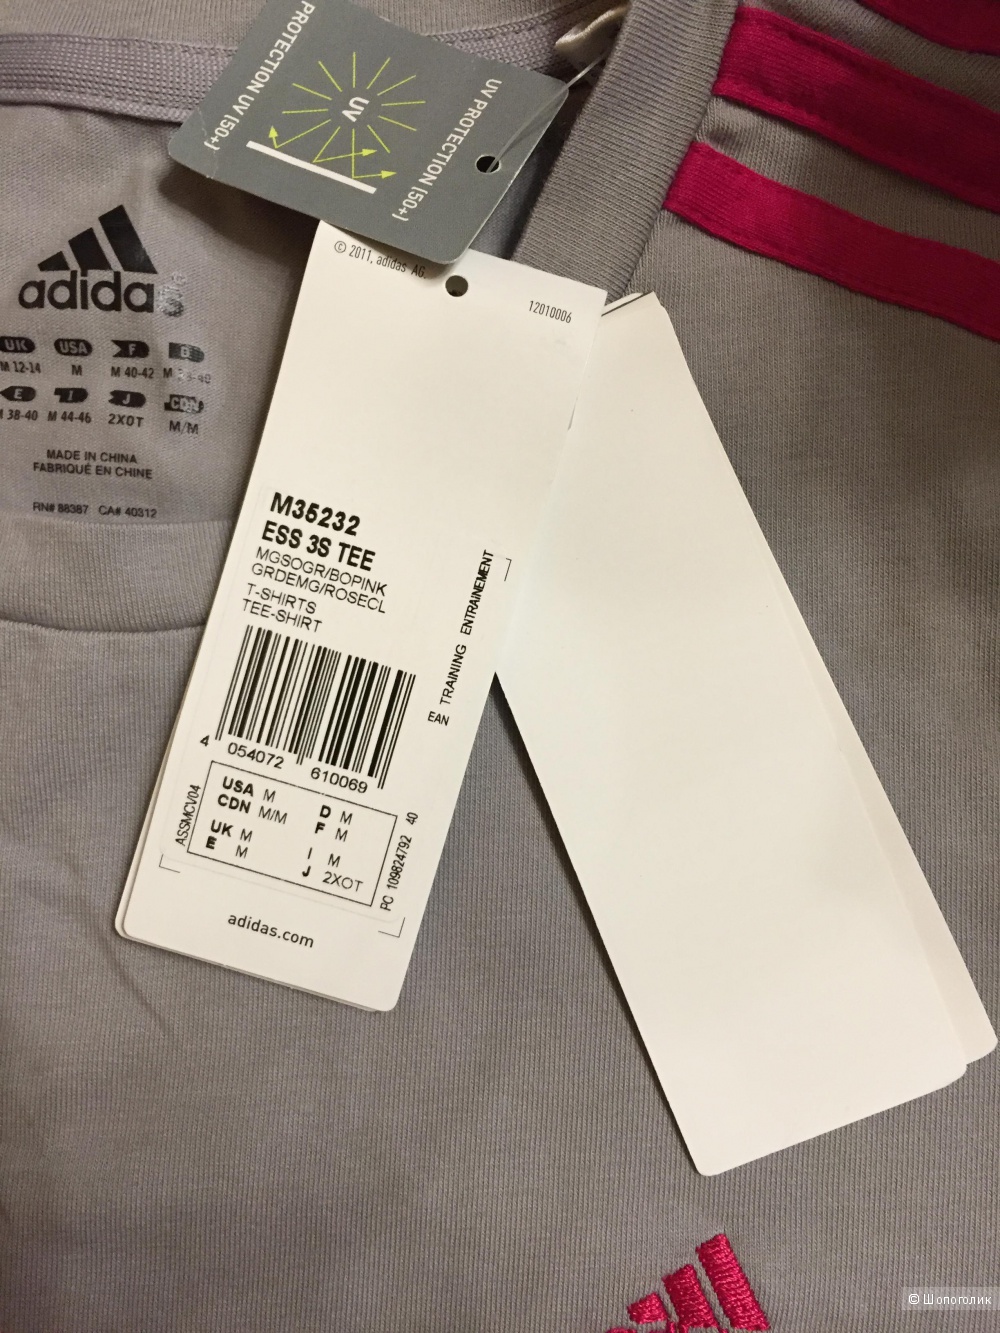 Новая женская футболка Adidas Climalite cotton размер M